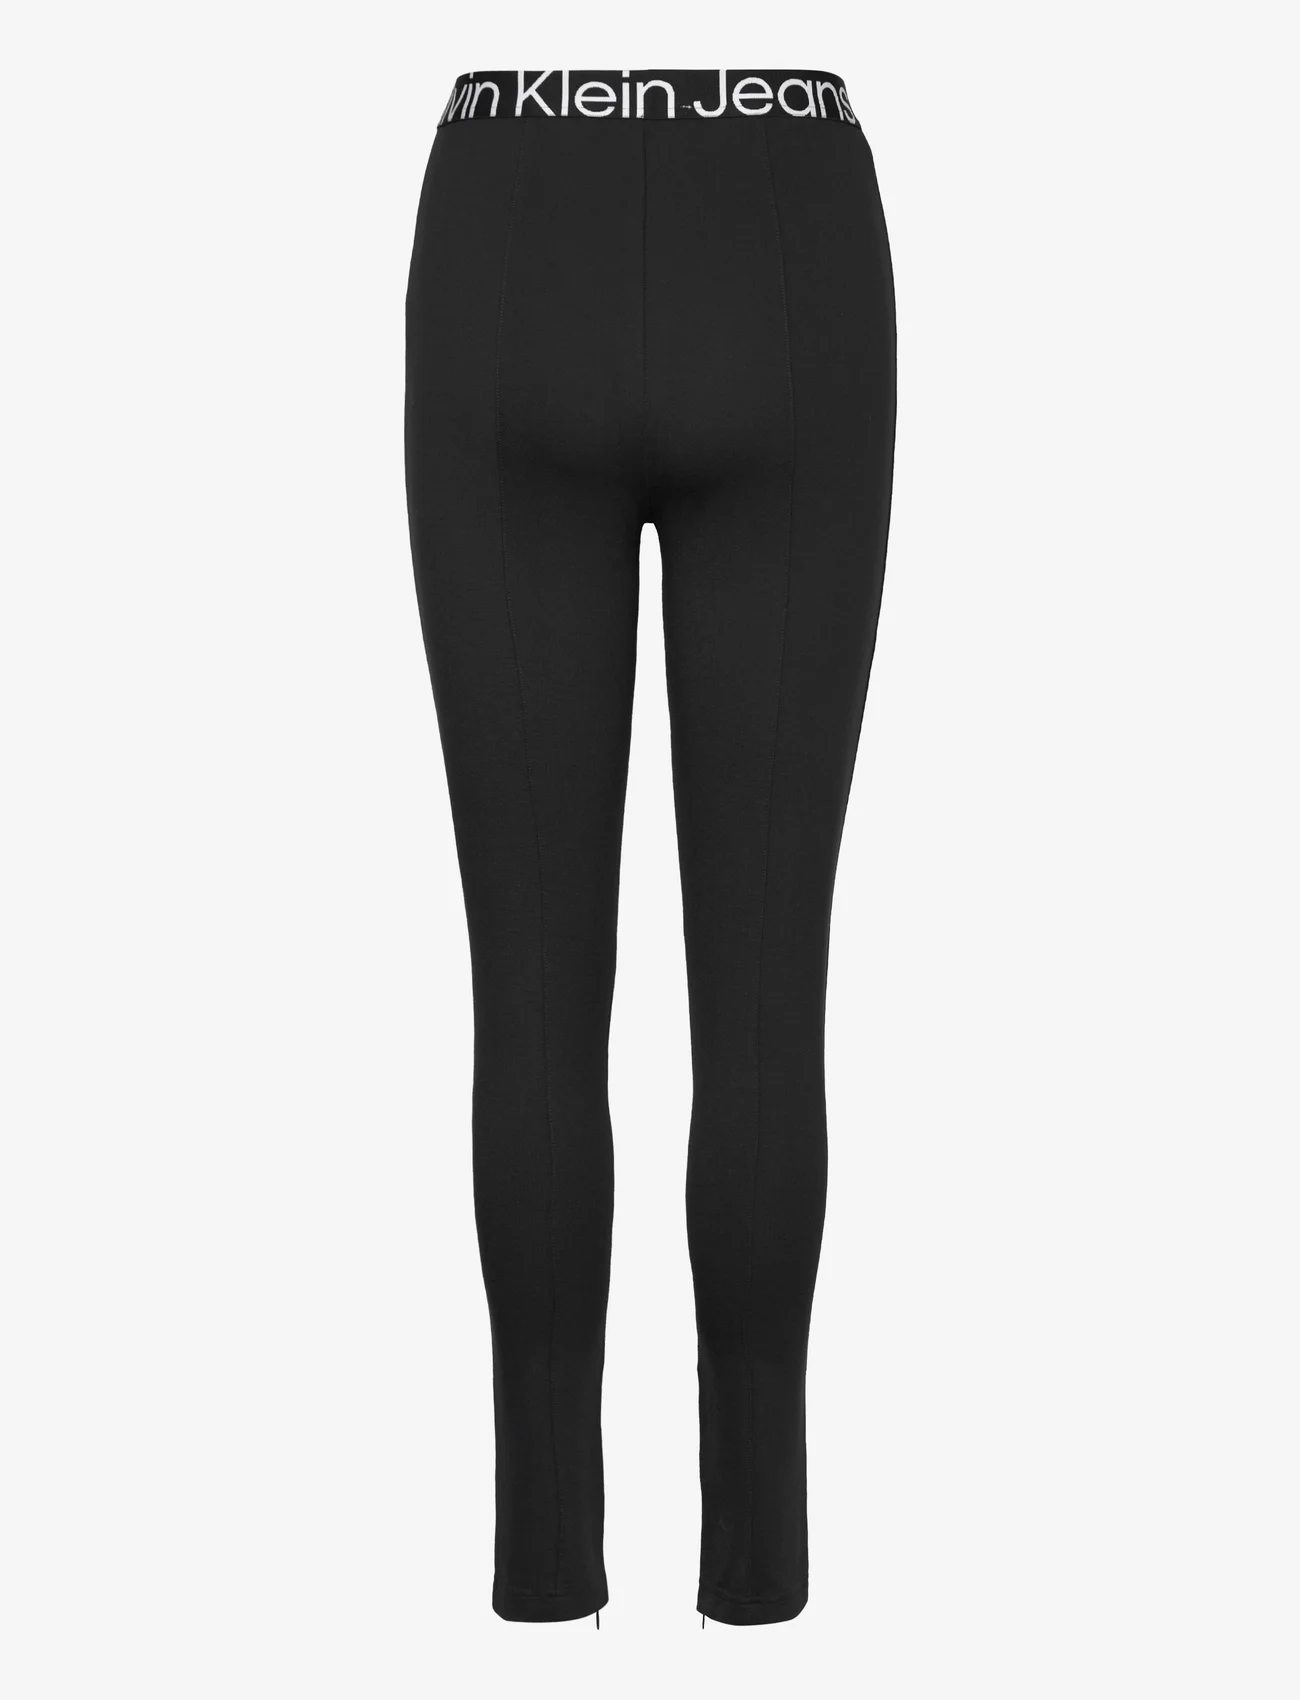 Calvin Klein Jeans - LOGO TAPE MILANO LEGGINGS - timpės - ck black - 1